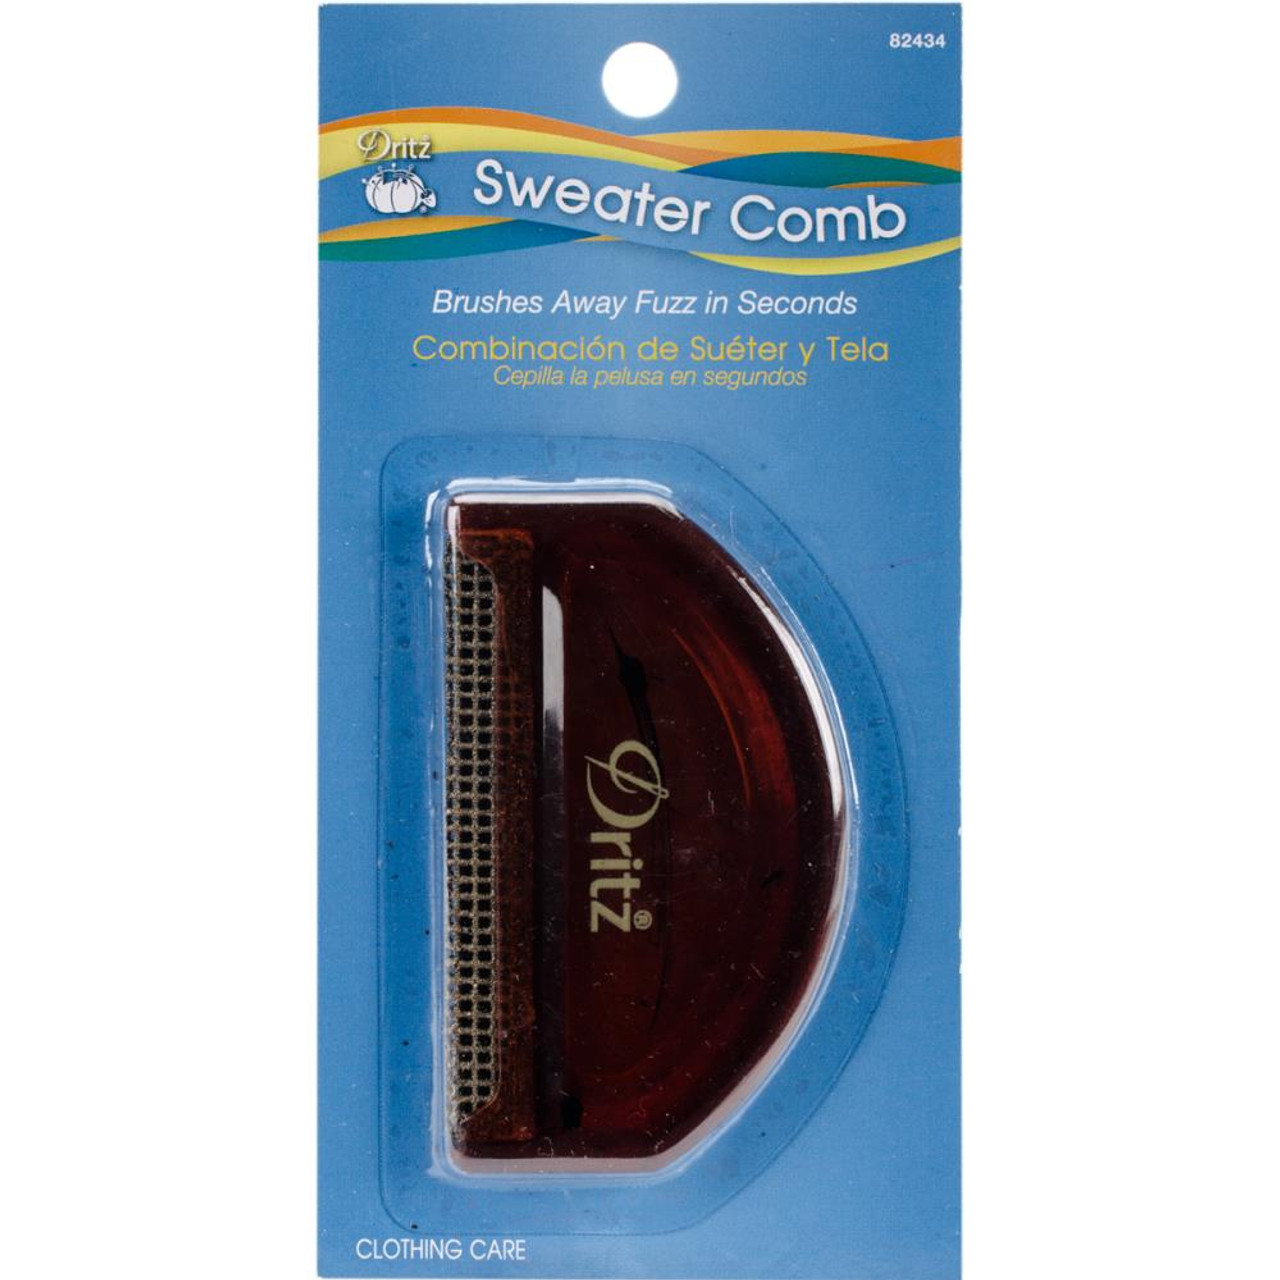 Dritz Sweater Comb